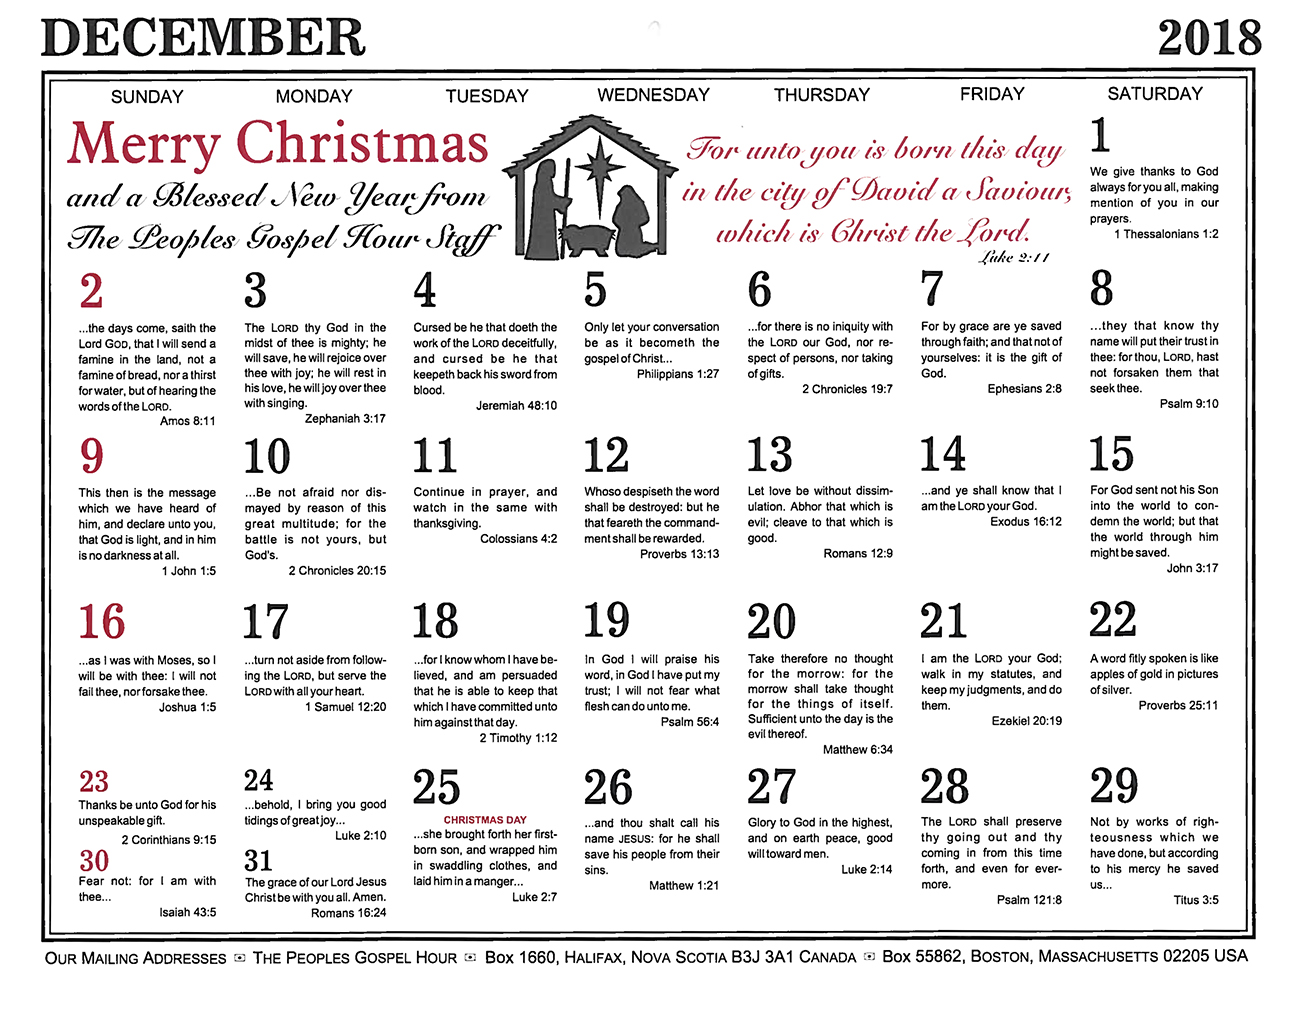 December: 2018 The Peoples Gospel Hour Calendar